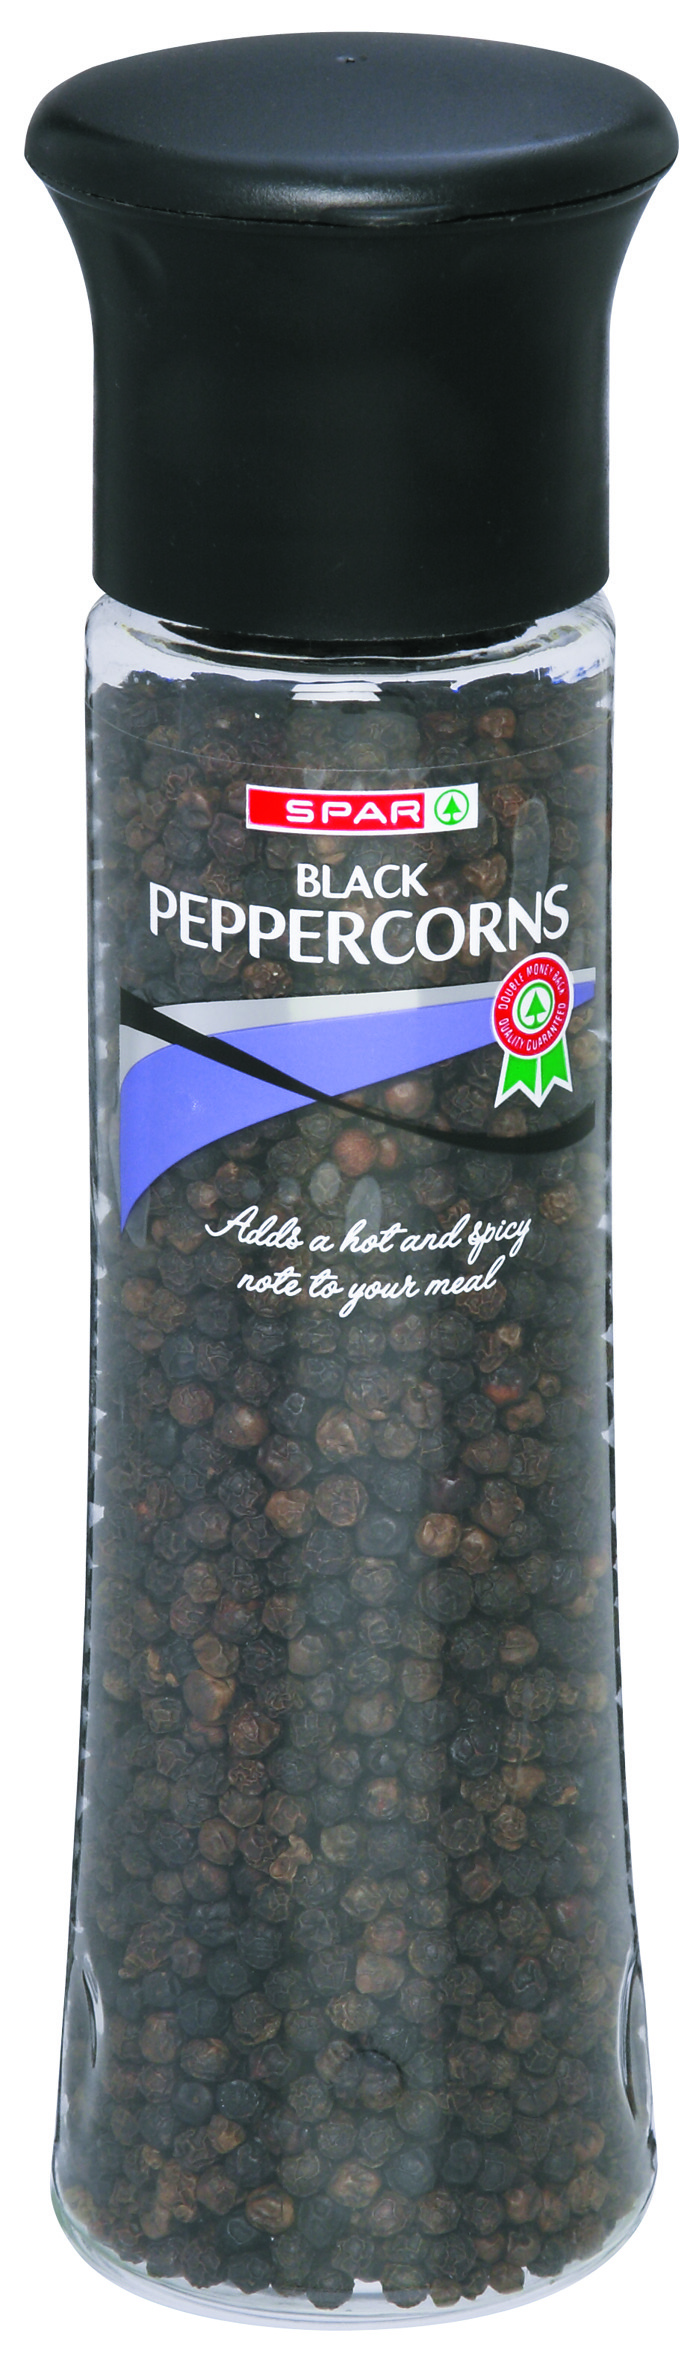 whole black peppercorns